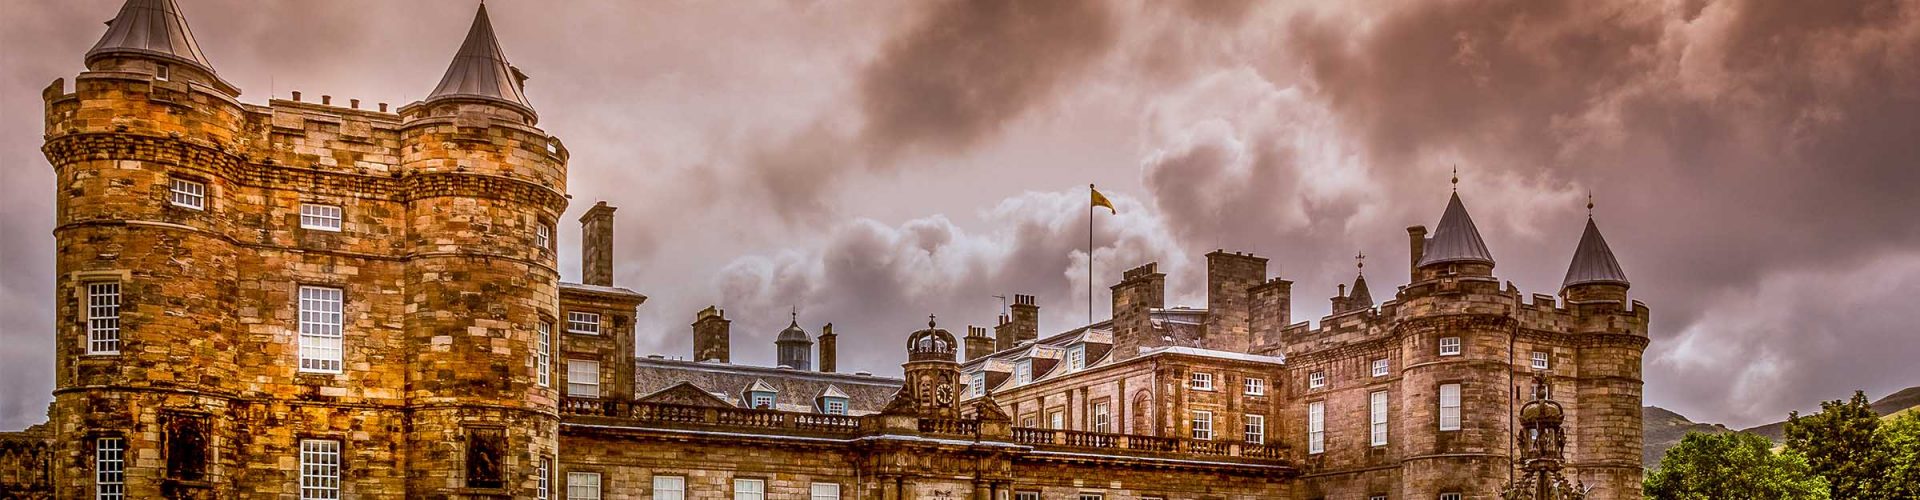 The Palace of Holyrood in Edinburgh